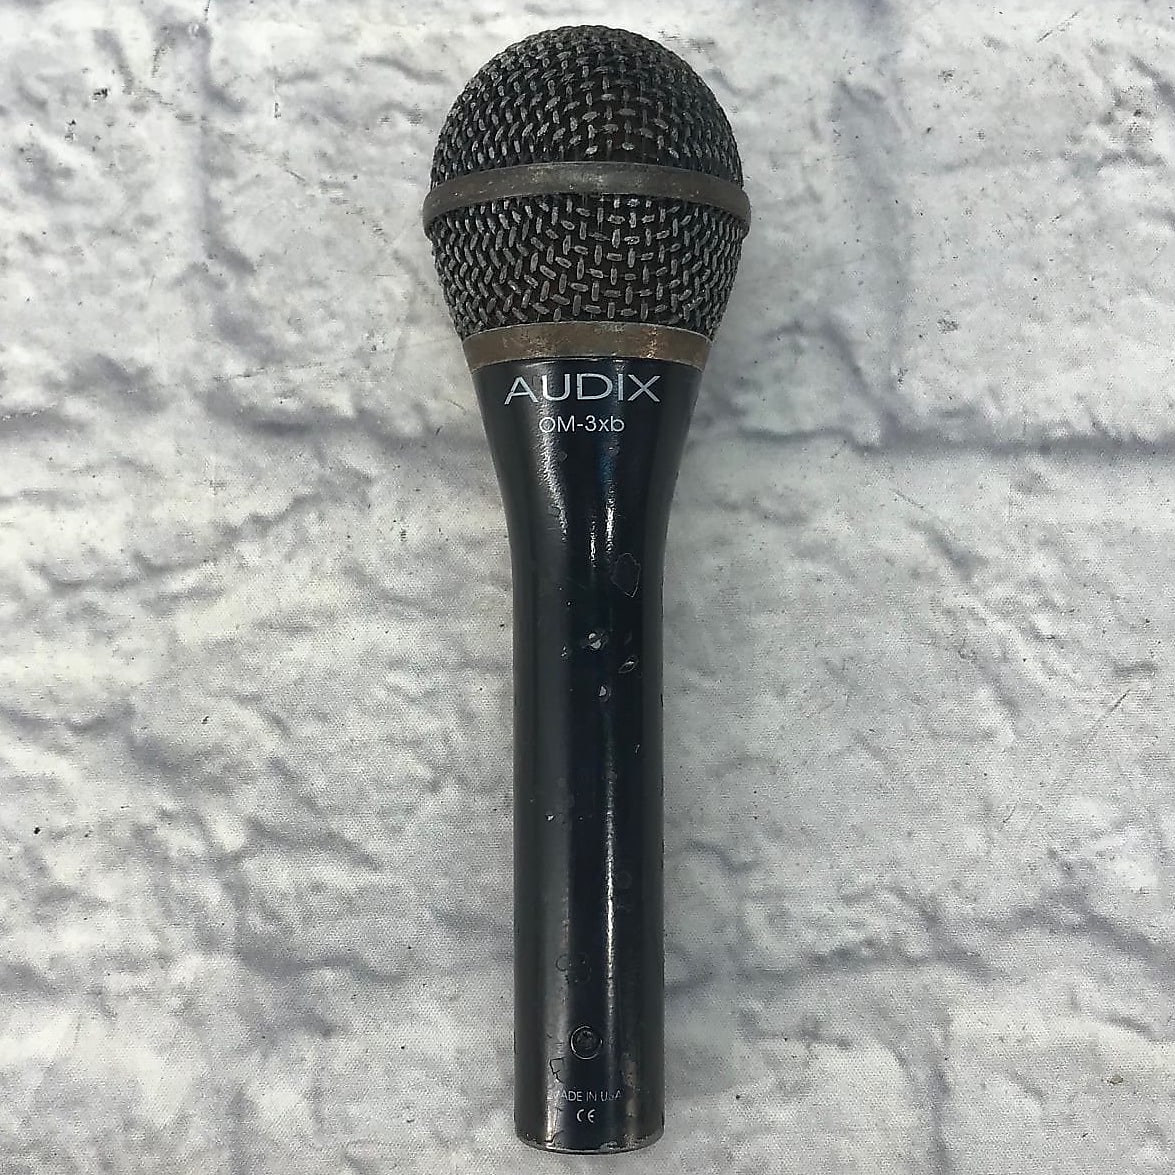 Audix OM-3xb Handheld Hypercardioid Dynamic Microphone | Reverb